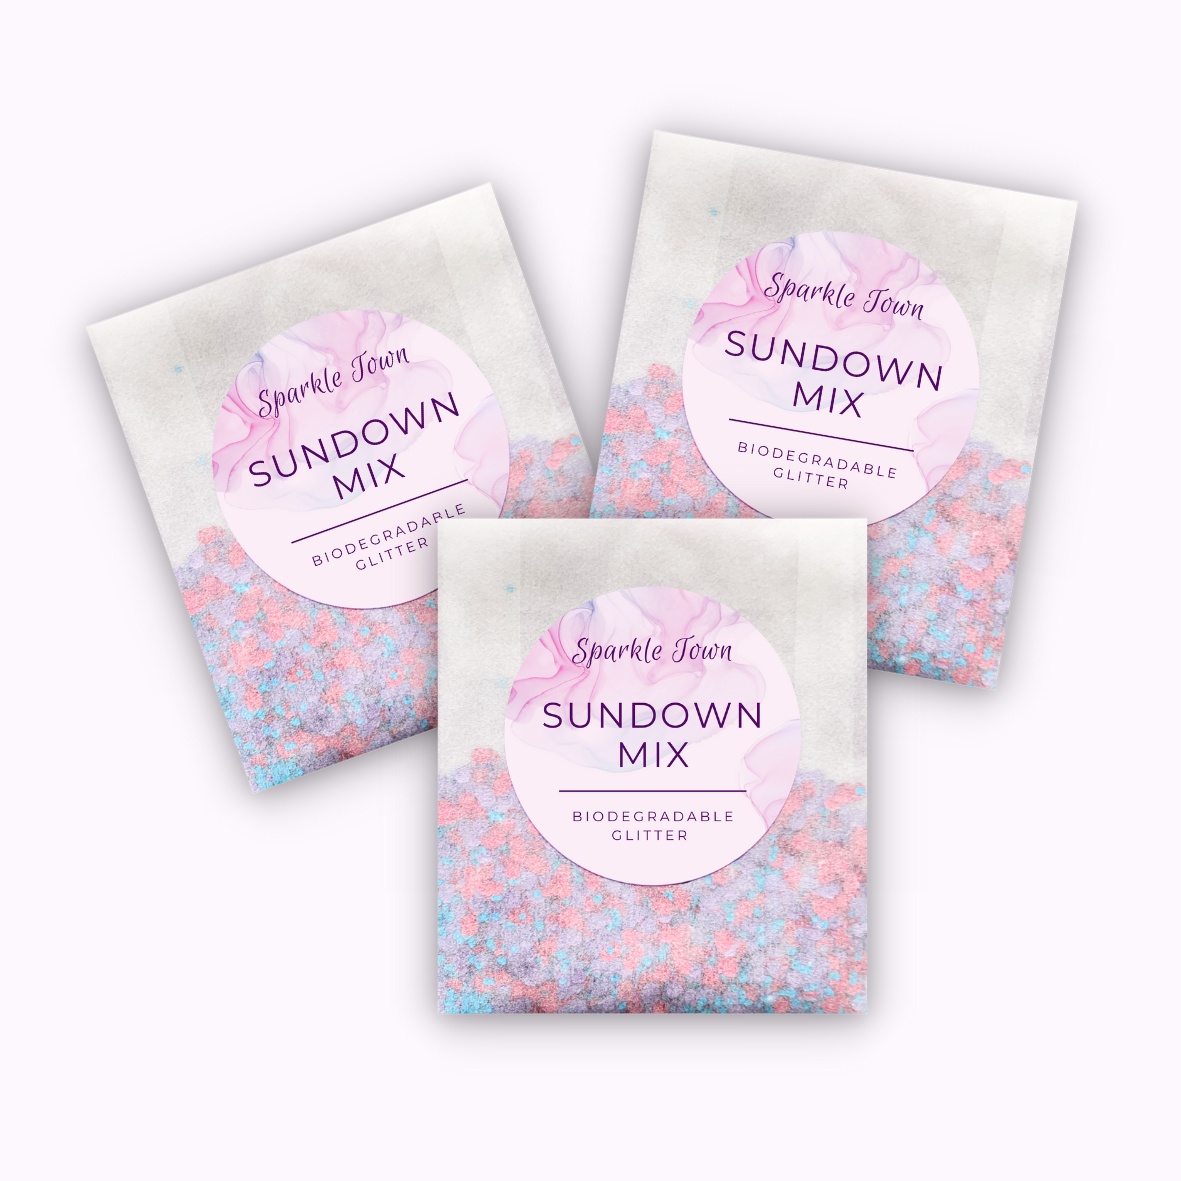 Sundown Mix Biodegradable Glitter